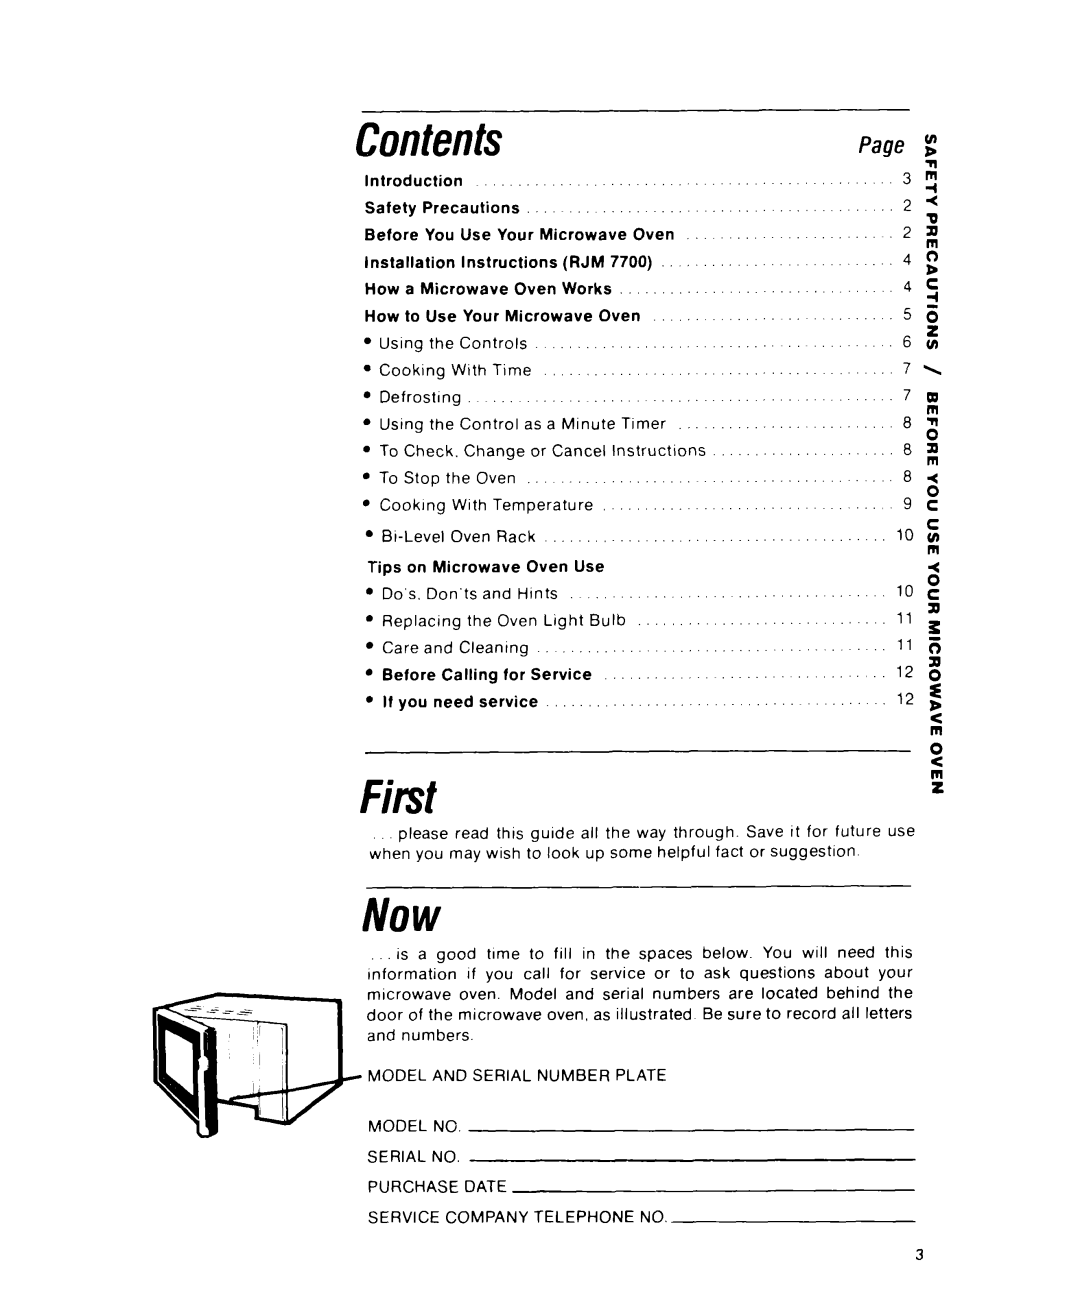 Whirlpool RJM 1870, RJM 7700 manual Contents, Fist, Page g n 